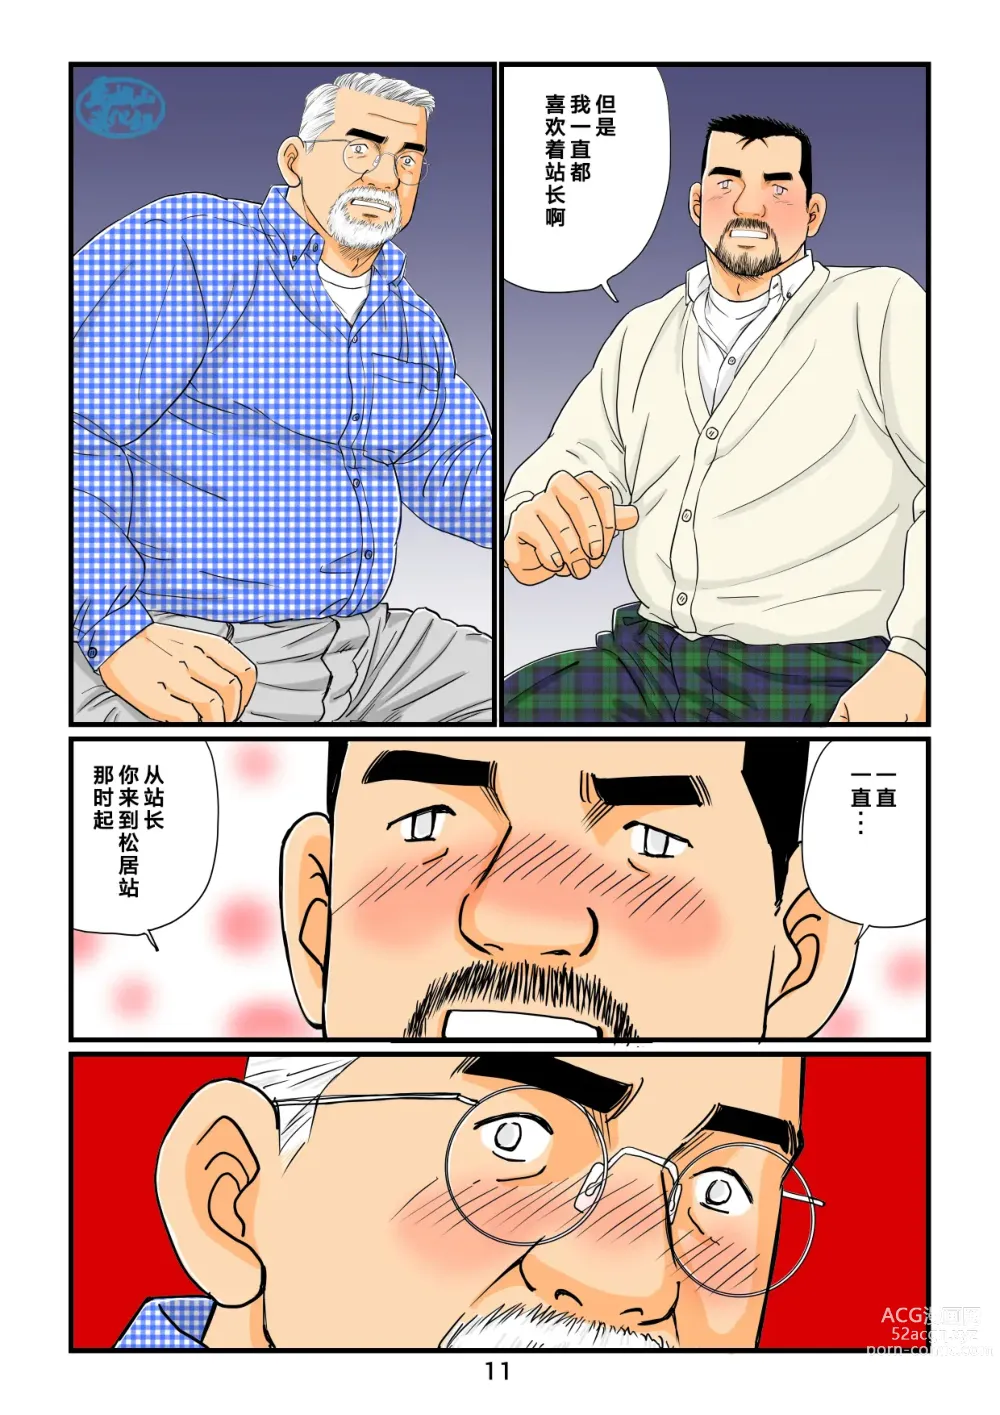 Page 11 of manga 「铁道员的浪漫」 第三回 站长与铁道员之夜